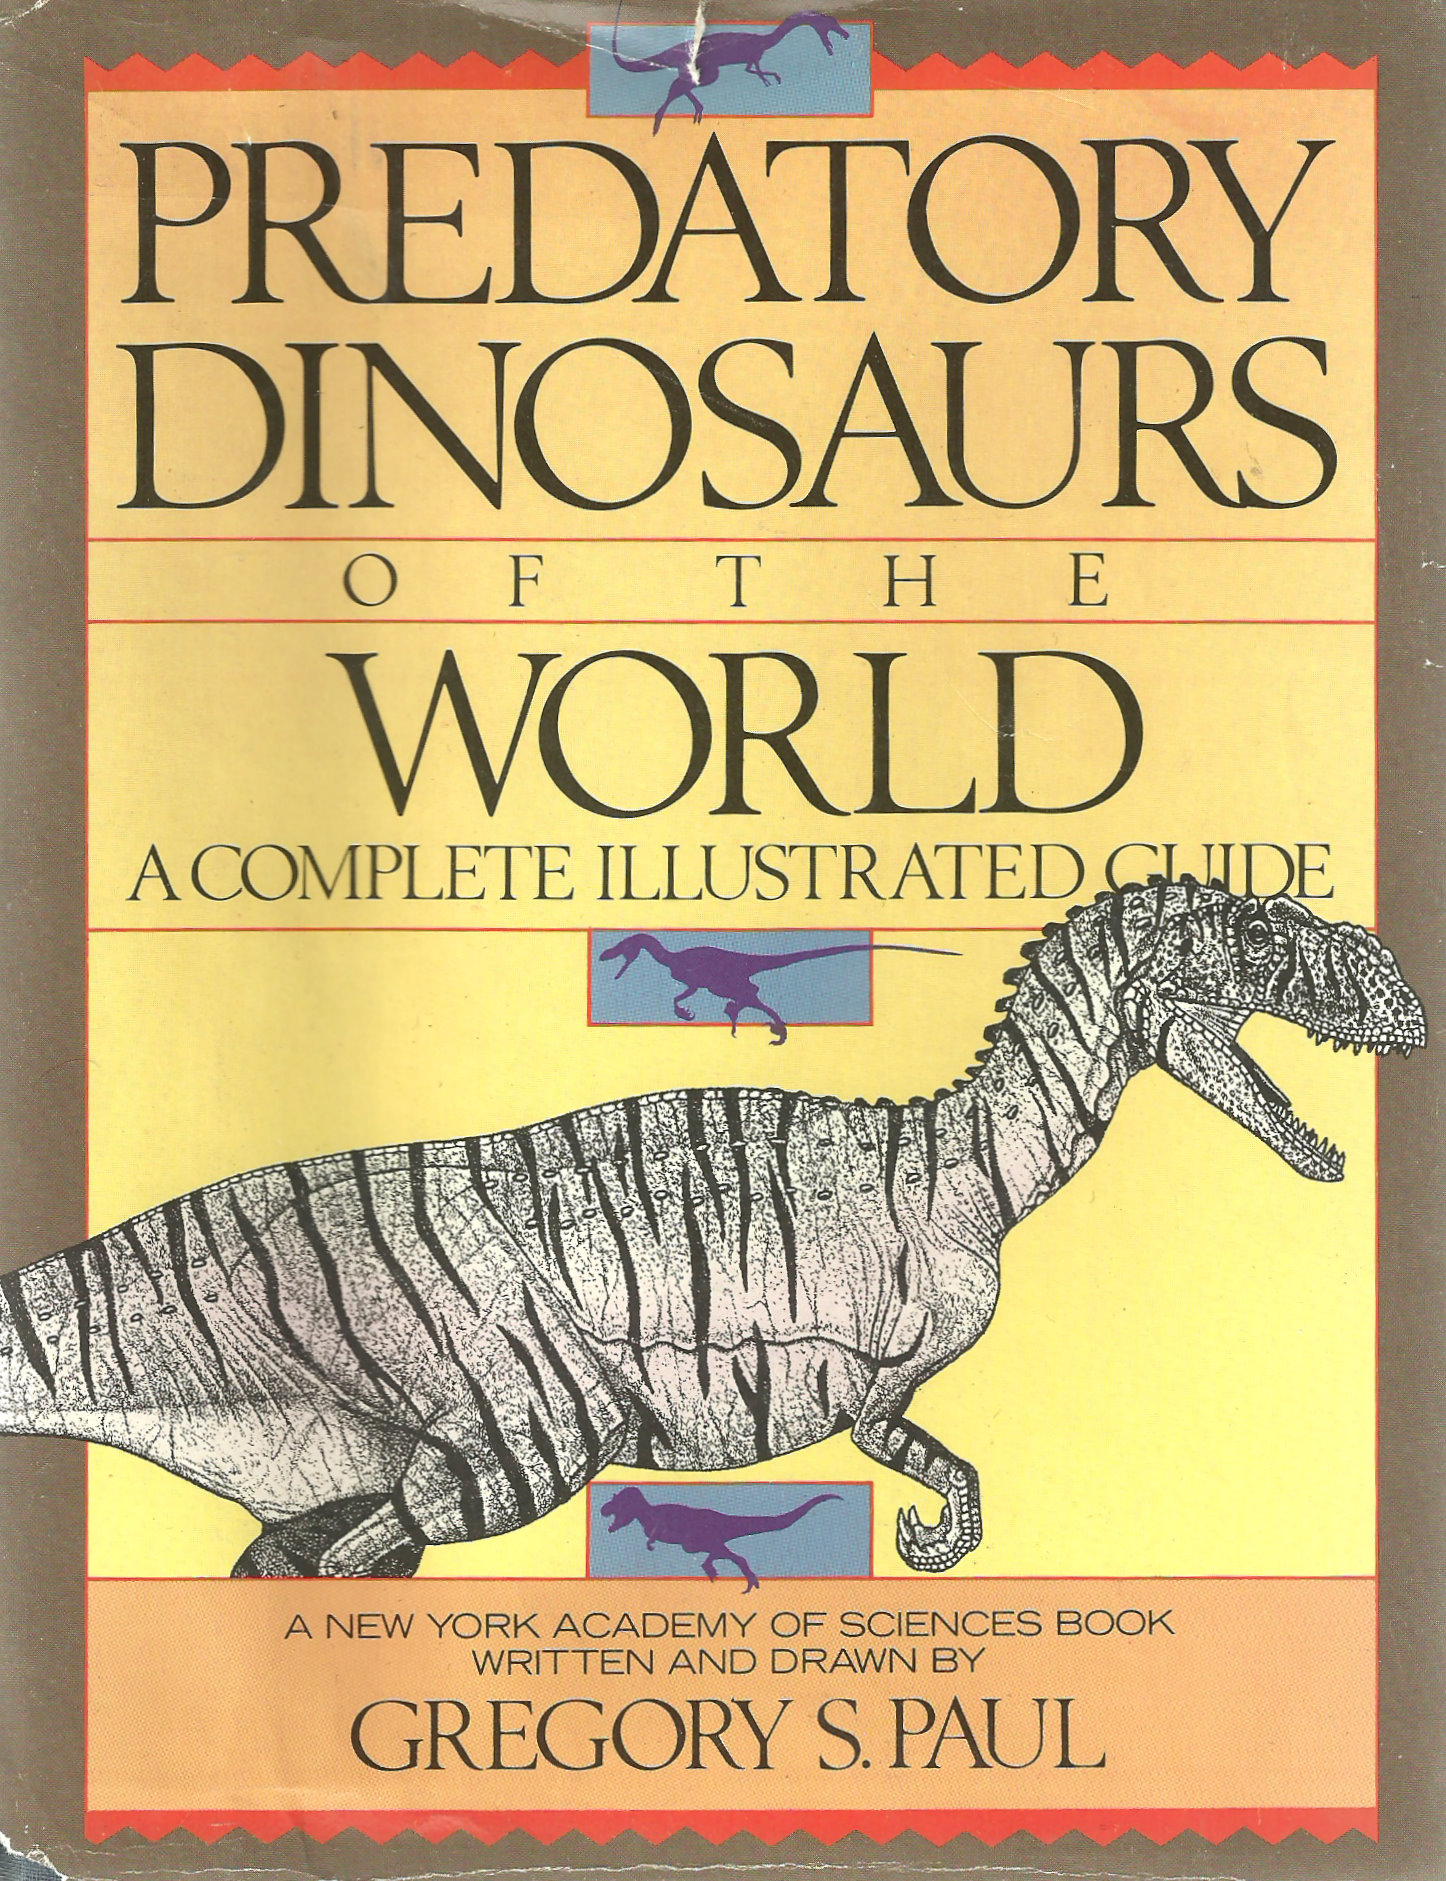 https://vignette4.wikia.nocookie.net/jurassicpark/images/0/03/Predatory-dinosaurs-of-the-world.jpg/revision/latest?cb=20150305083725